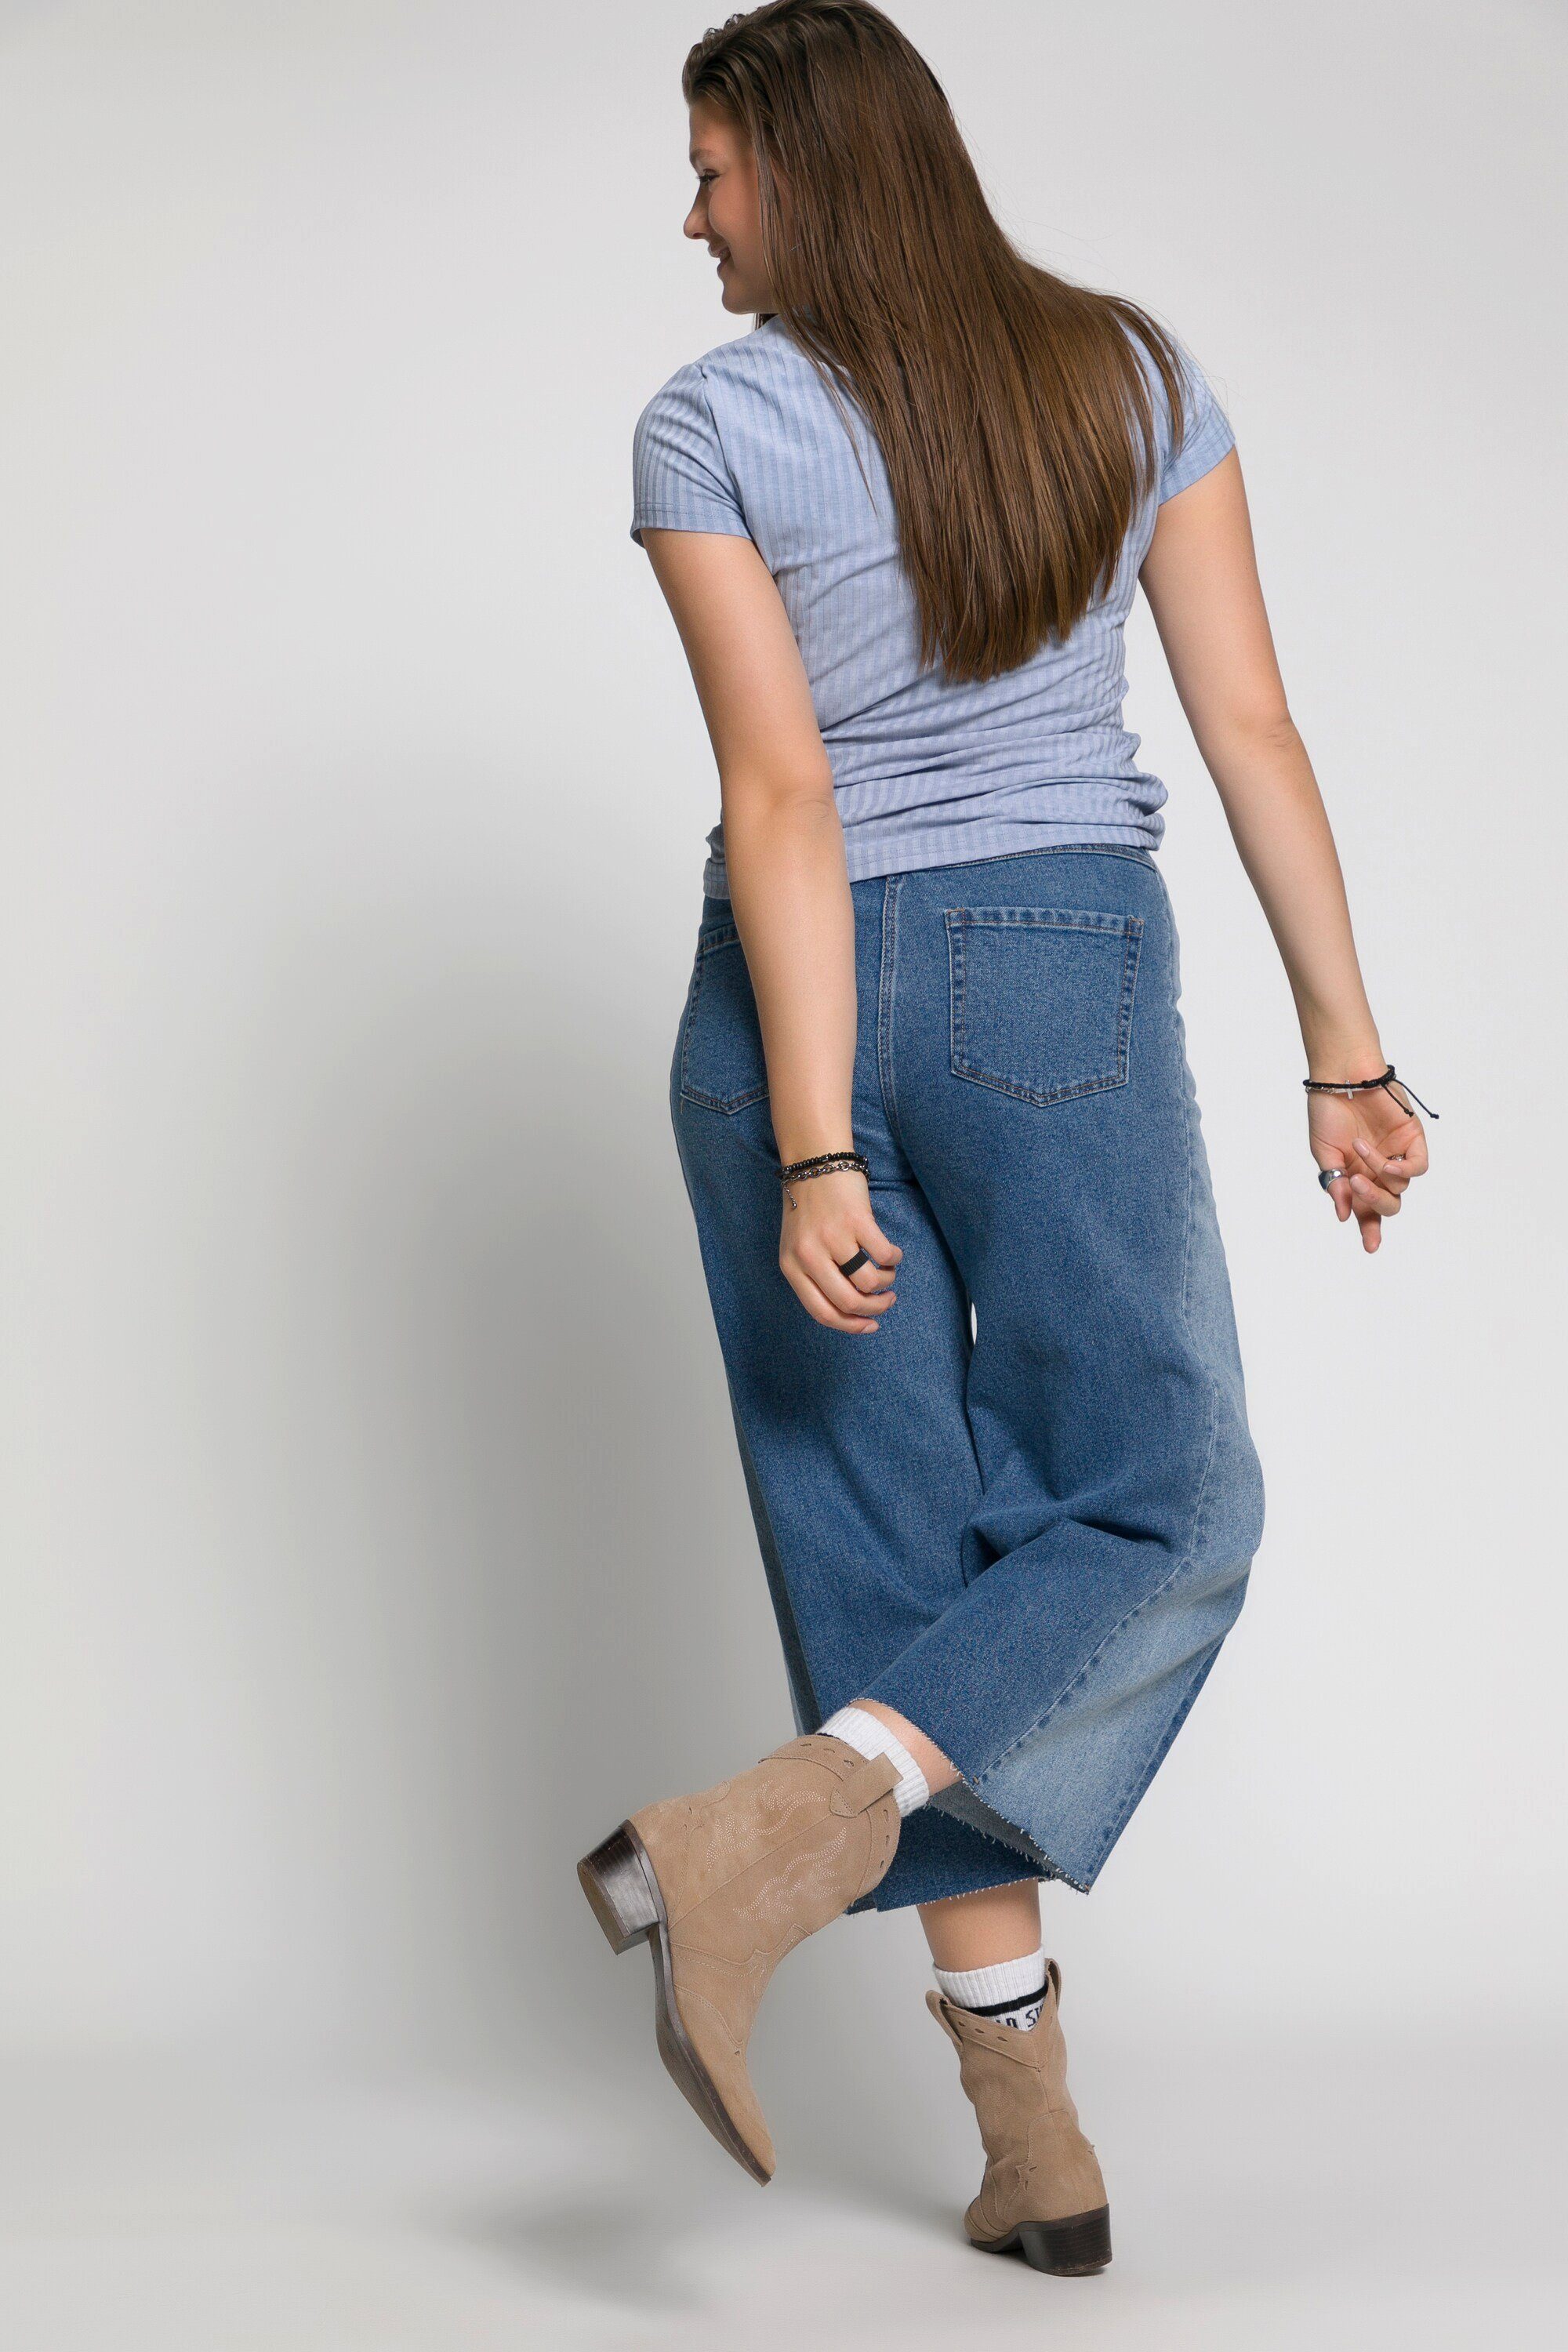 Culotte Studio Look Fransensaum Untold Jeans Patch Culotte 5-Pocket